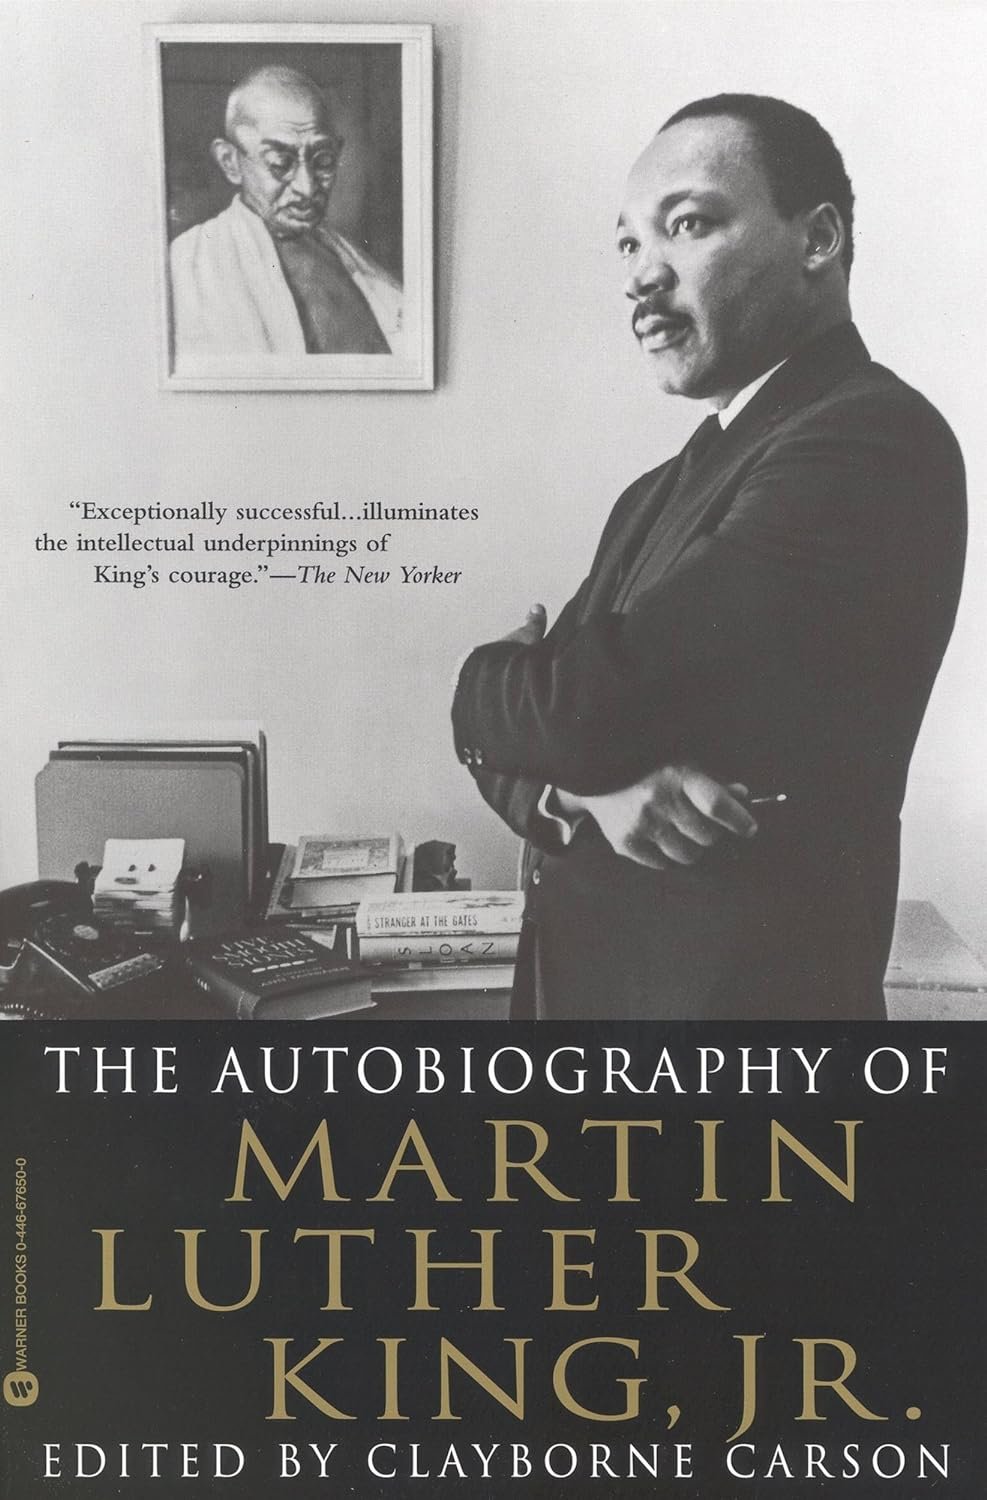 autobiography_martinLutherKingjr_bookcover.jpg